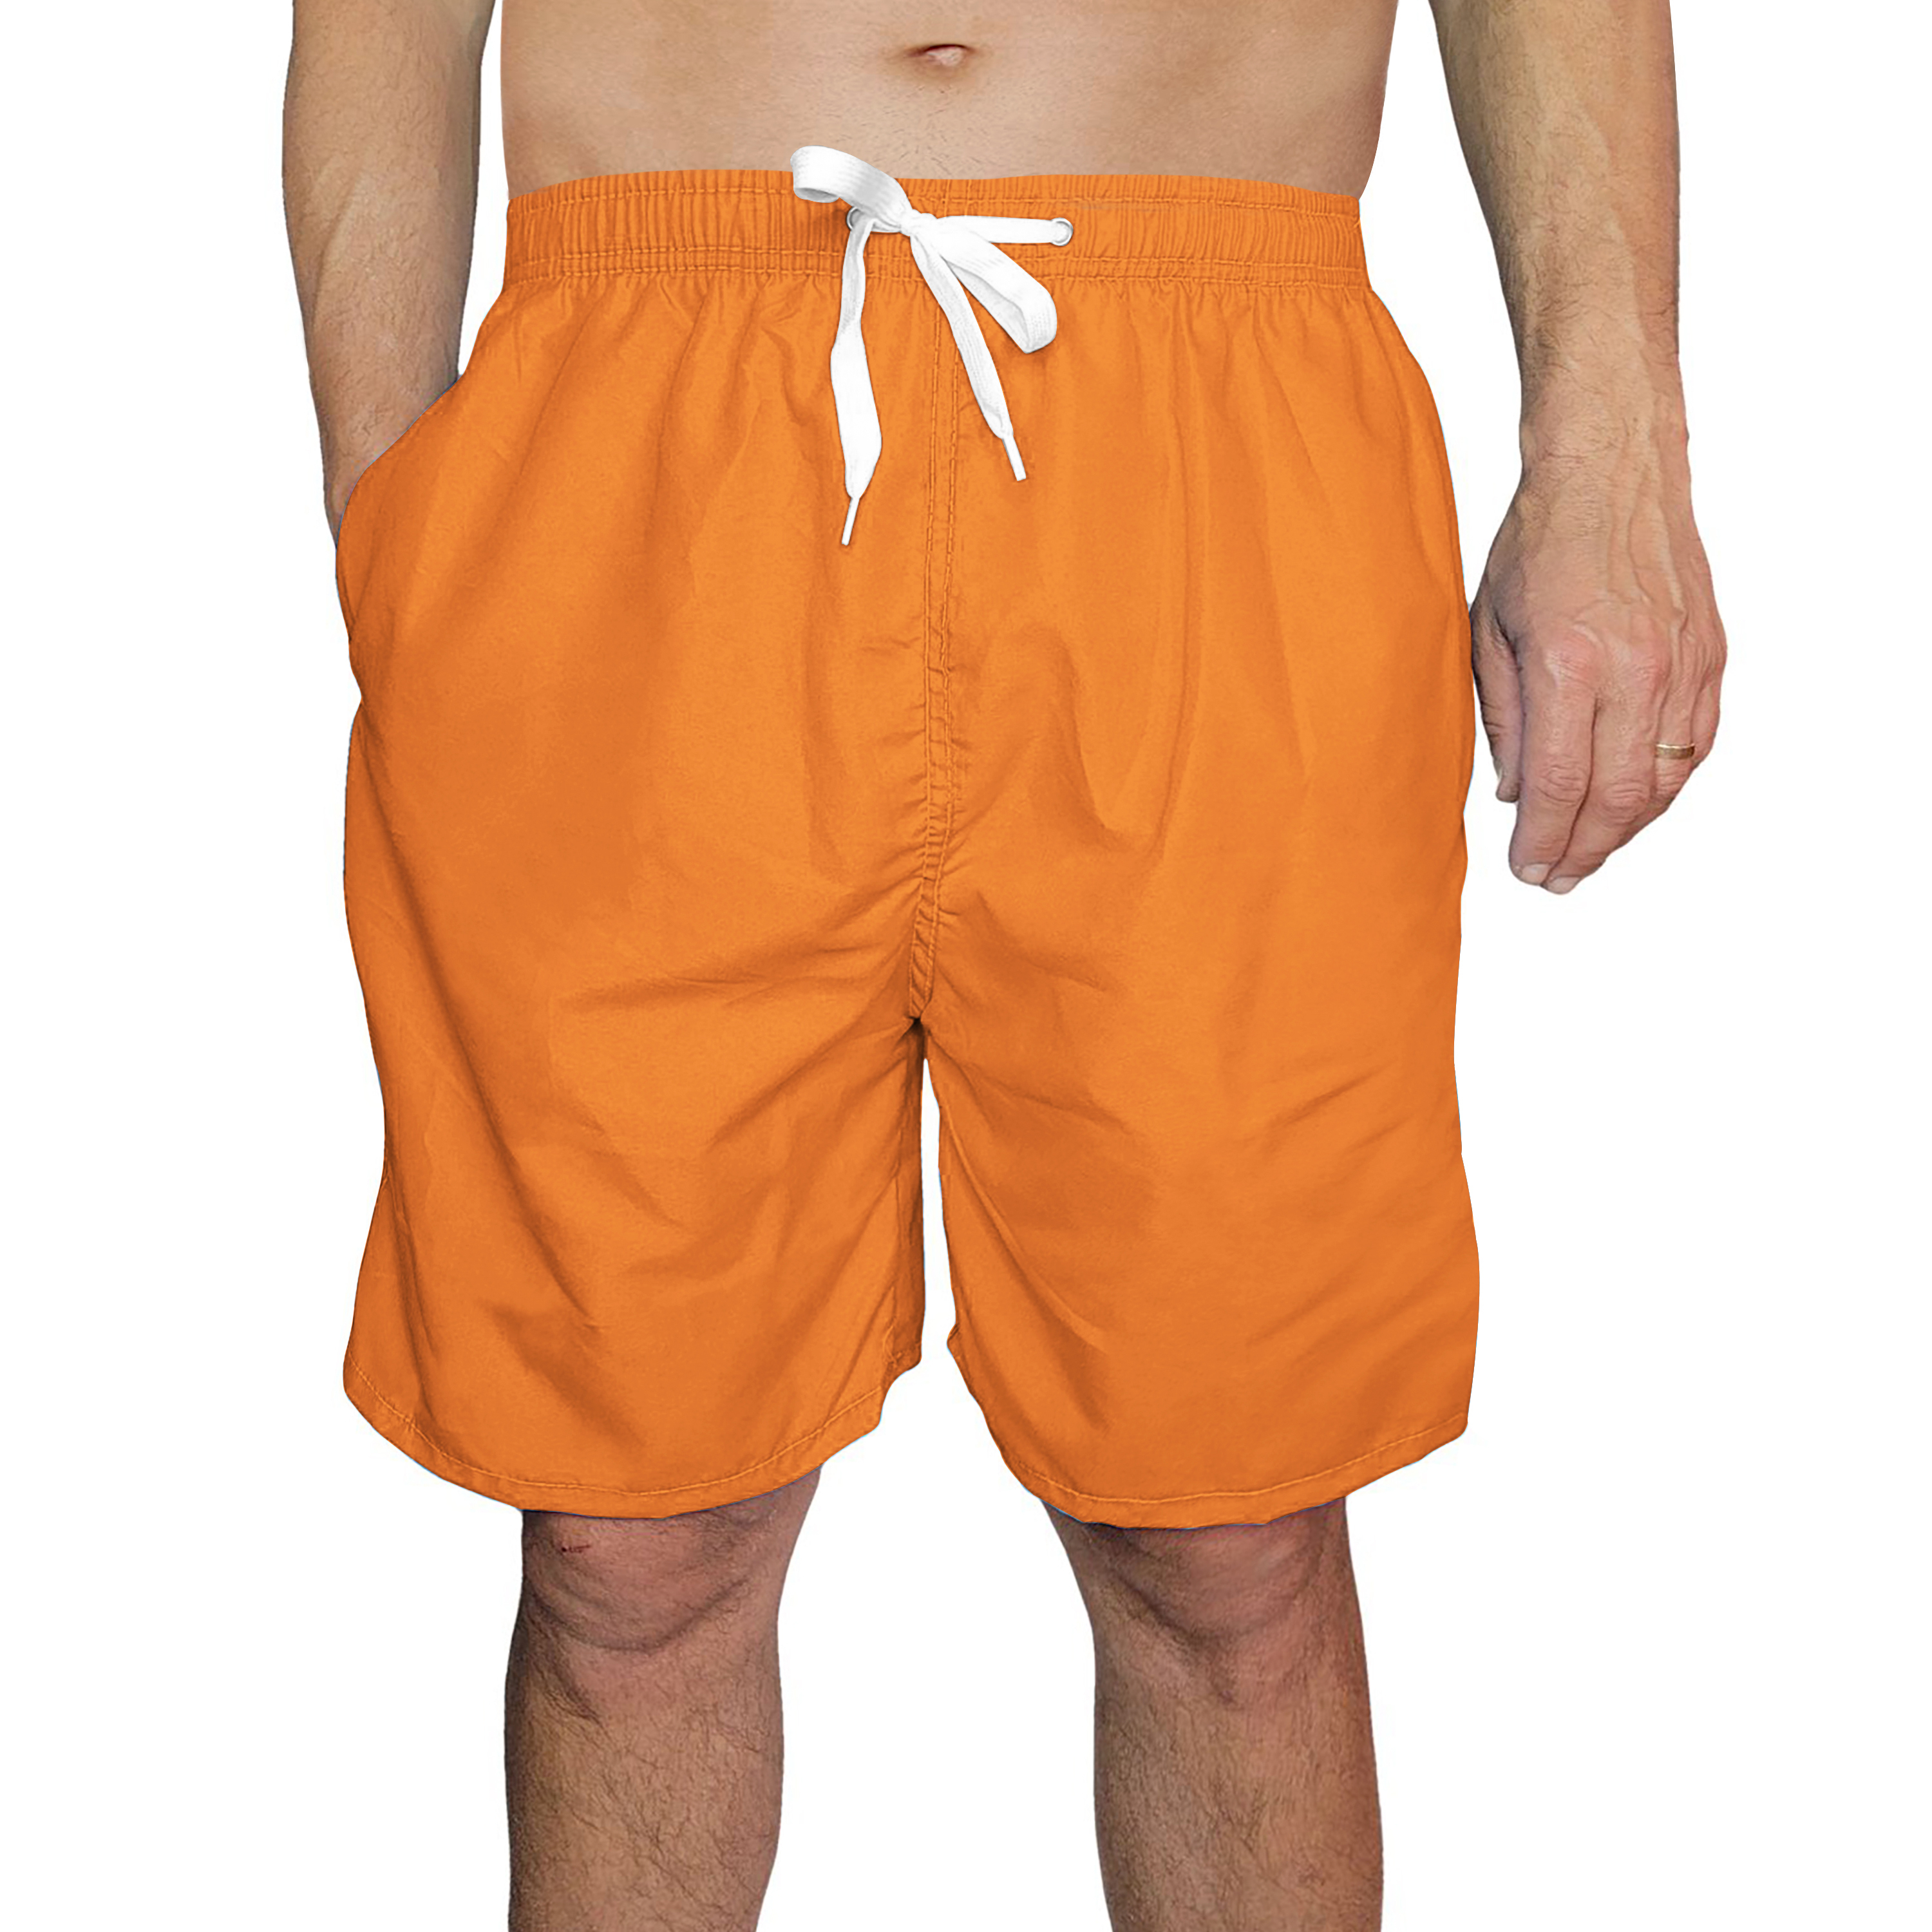 5-Pack Men's Quick Dry Swim Trunks With Pockets Solid Bathing Beachwear Flex Board Shorts - L